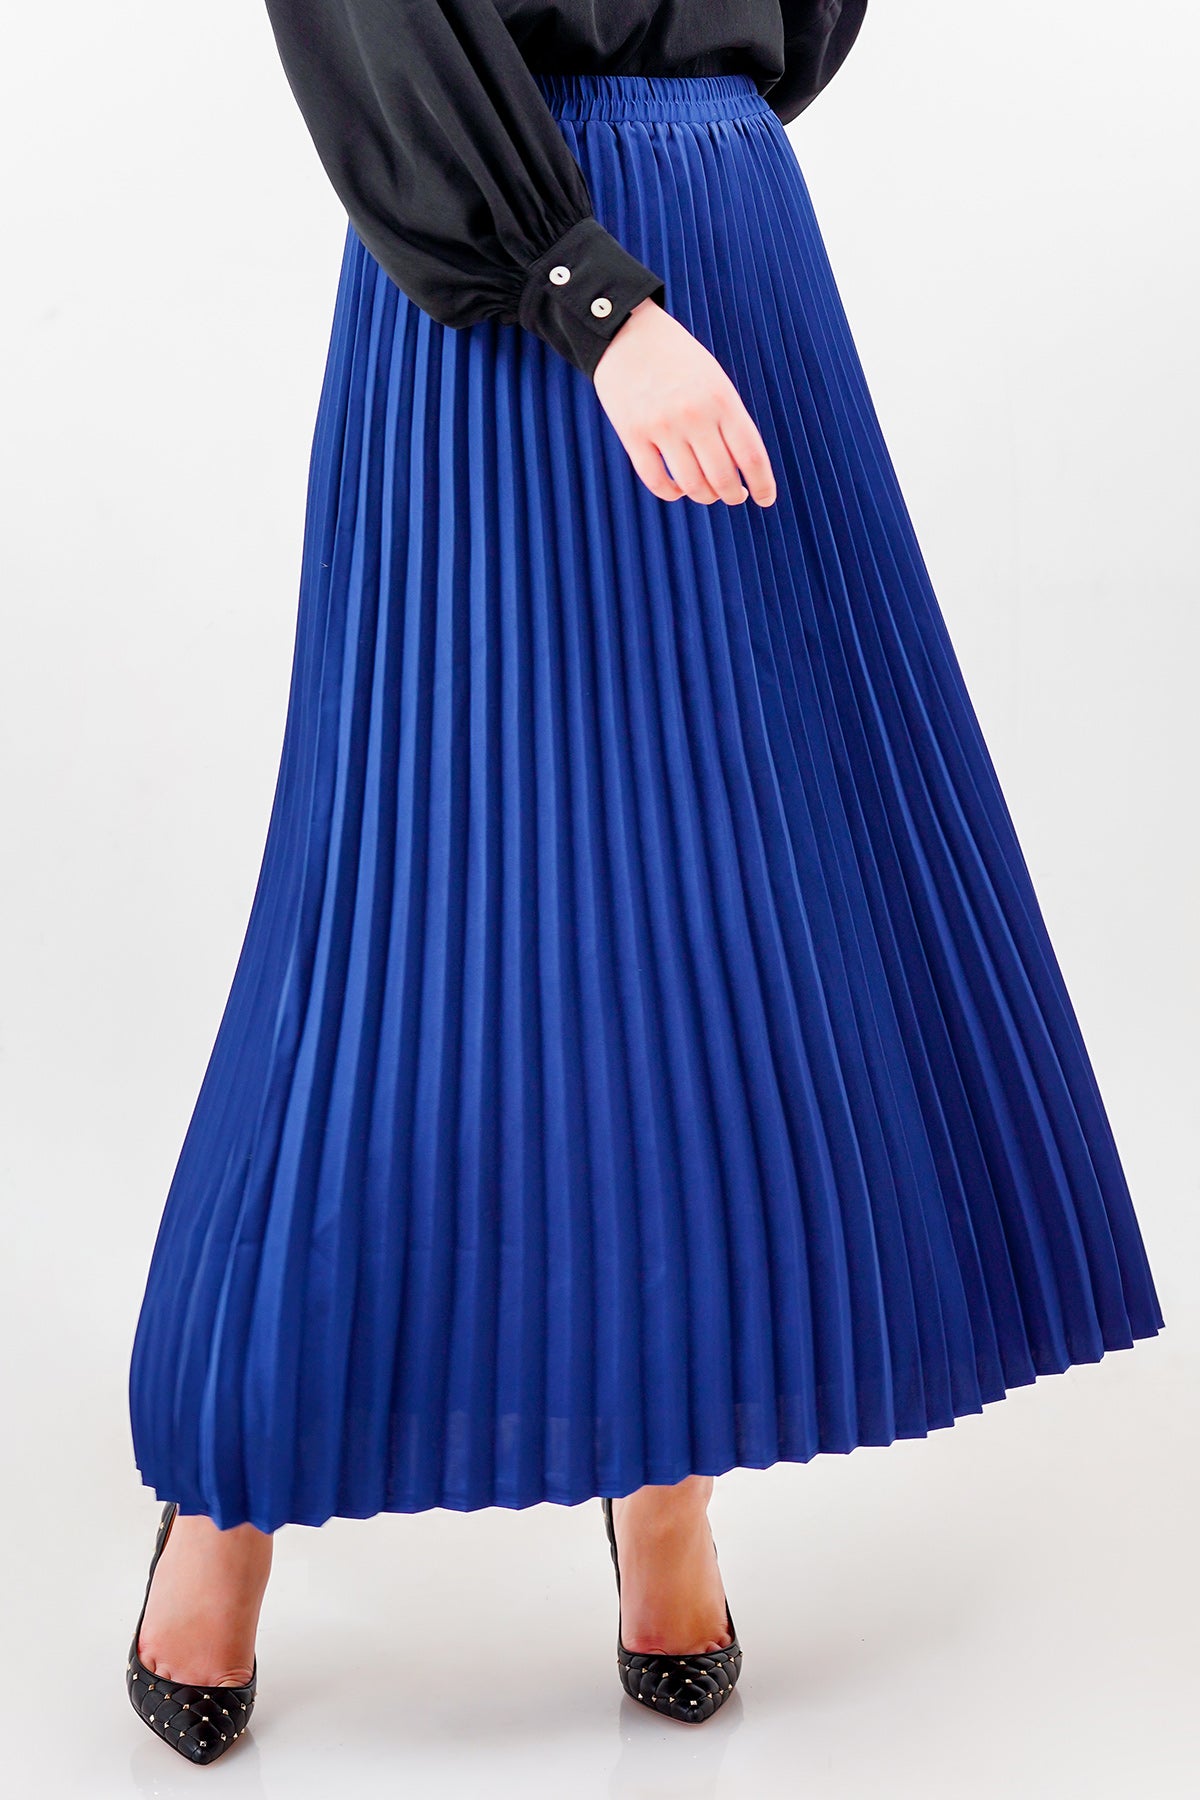 Satin Pleats Skirt - Royal Blue